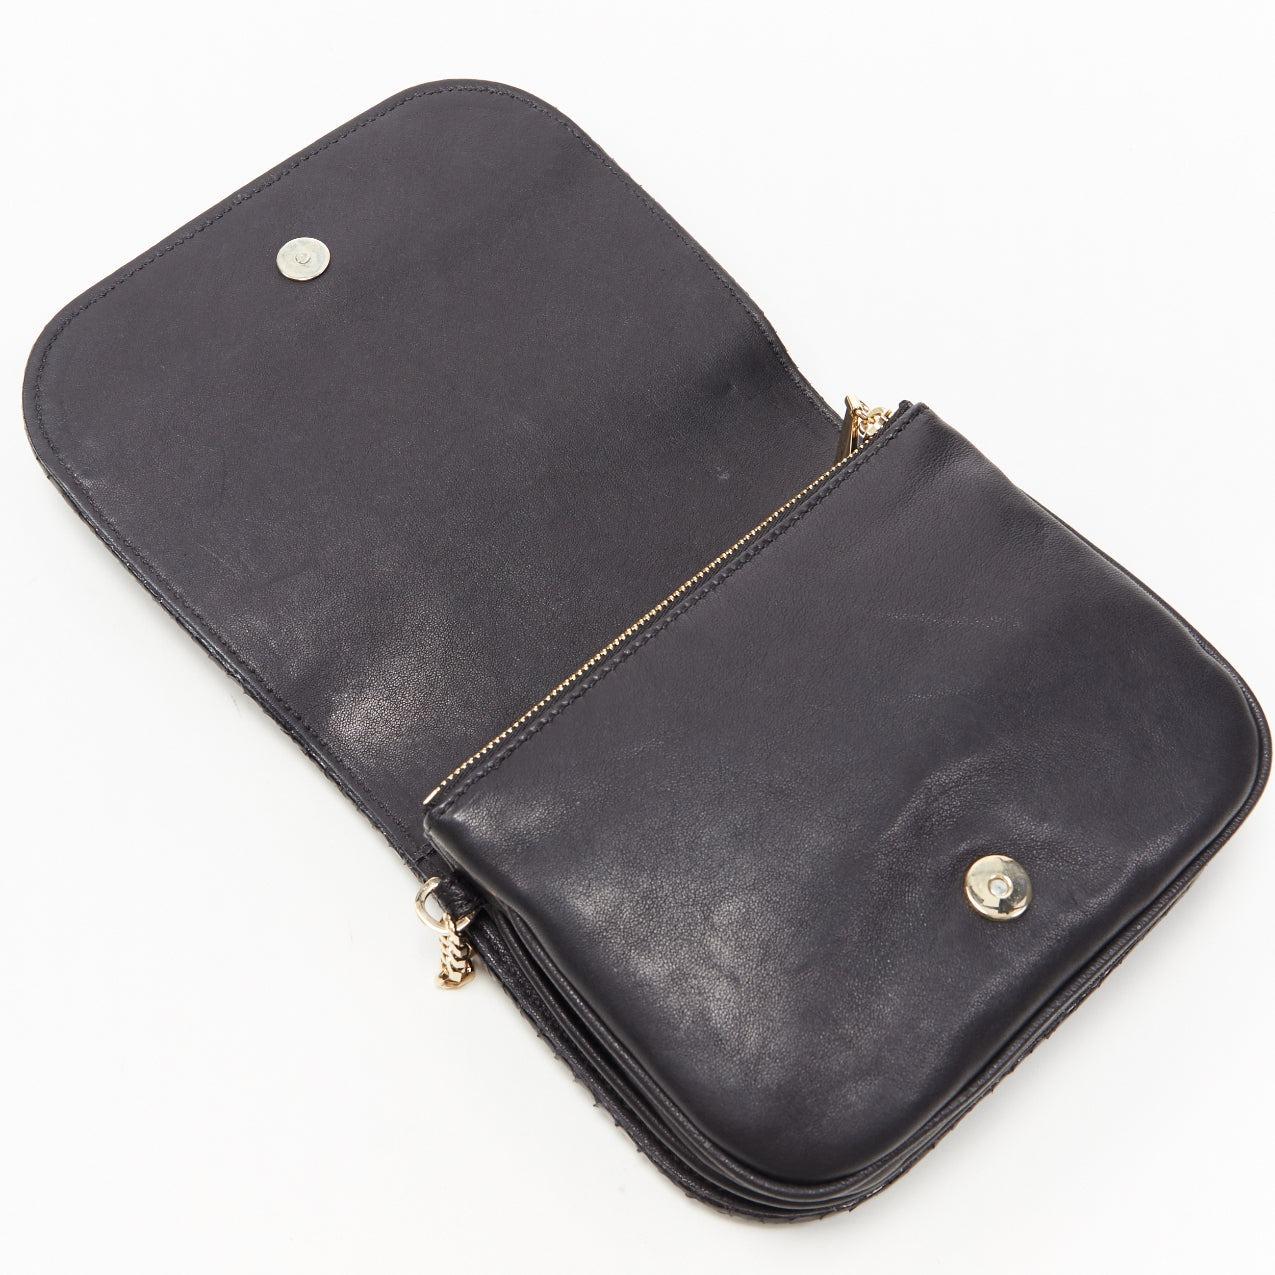 JIMMY CHOO black woven pleated leather gold bar detail flap crossbody bag 7